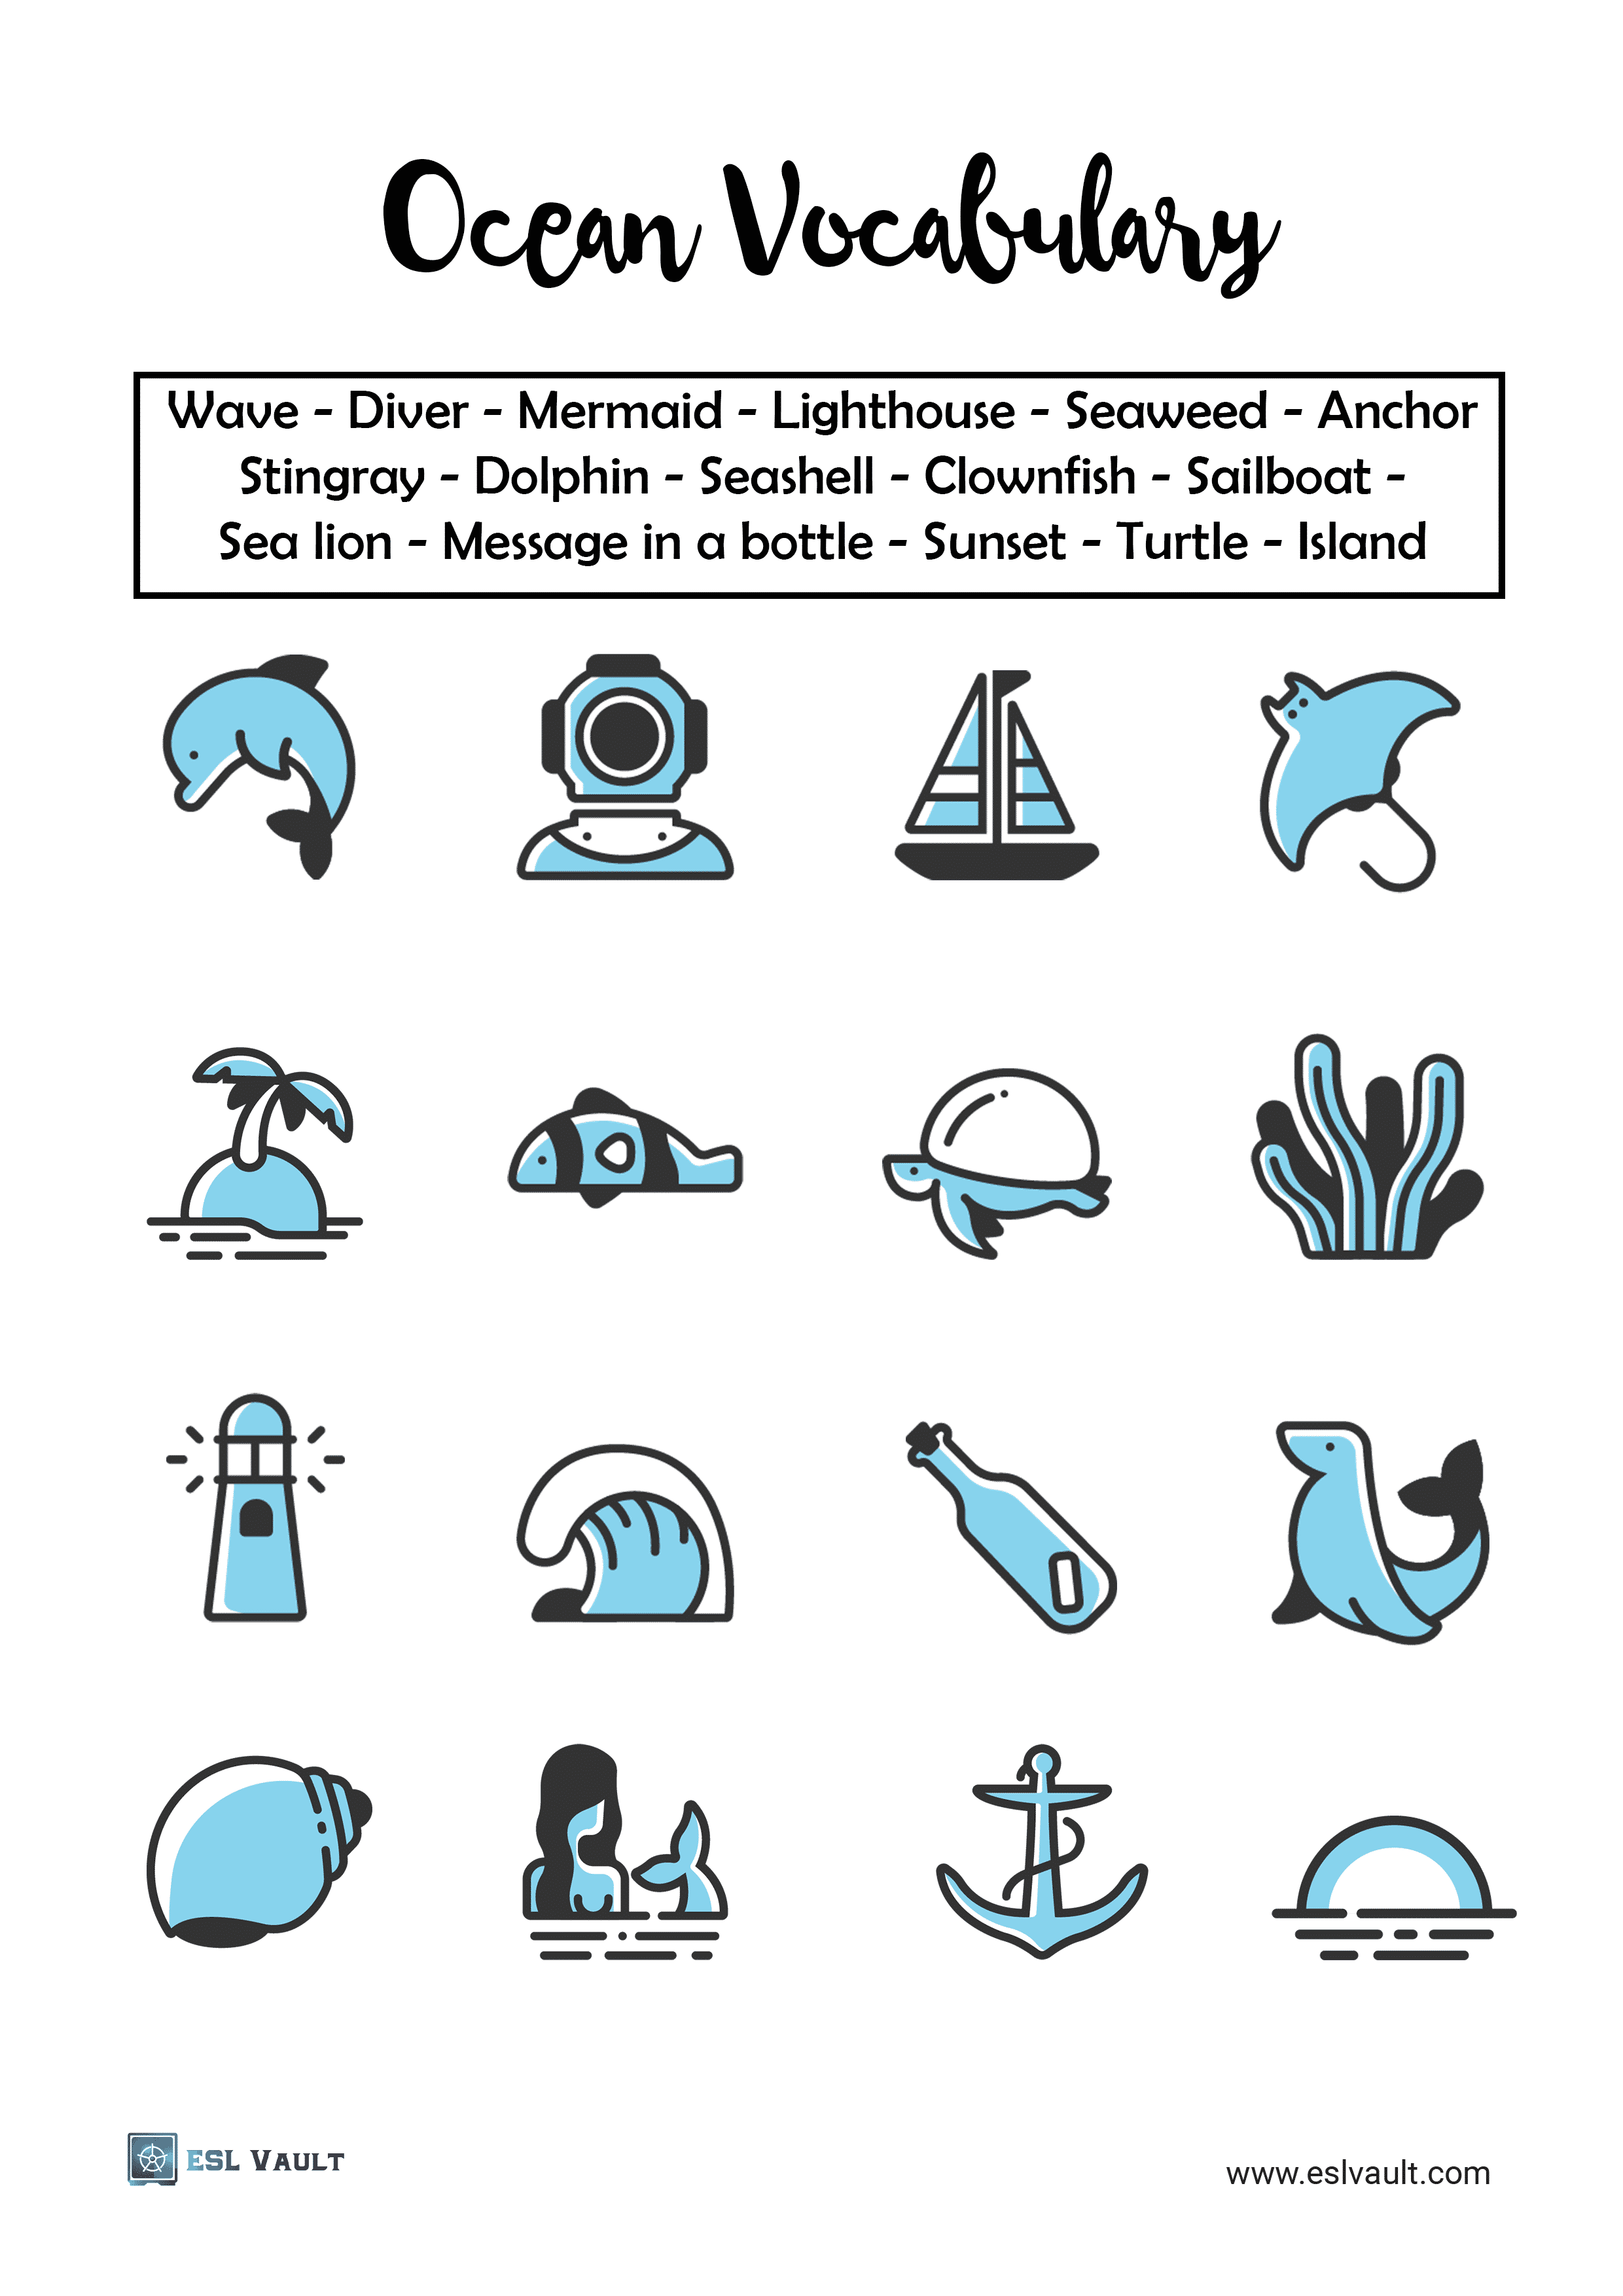 Fishing vocabulary worksheet - ESL Vault